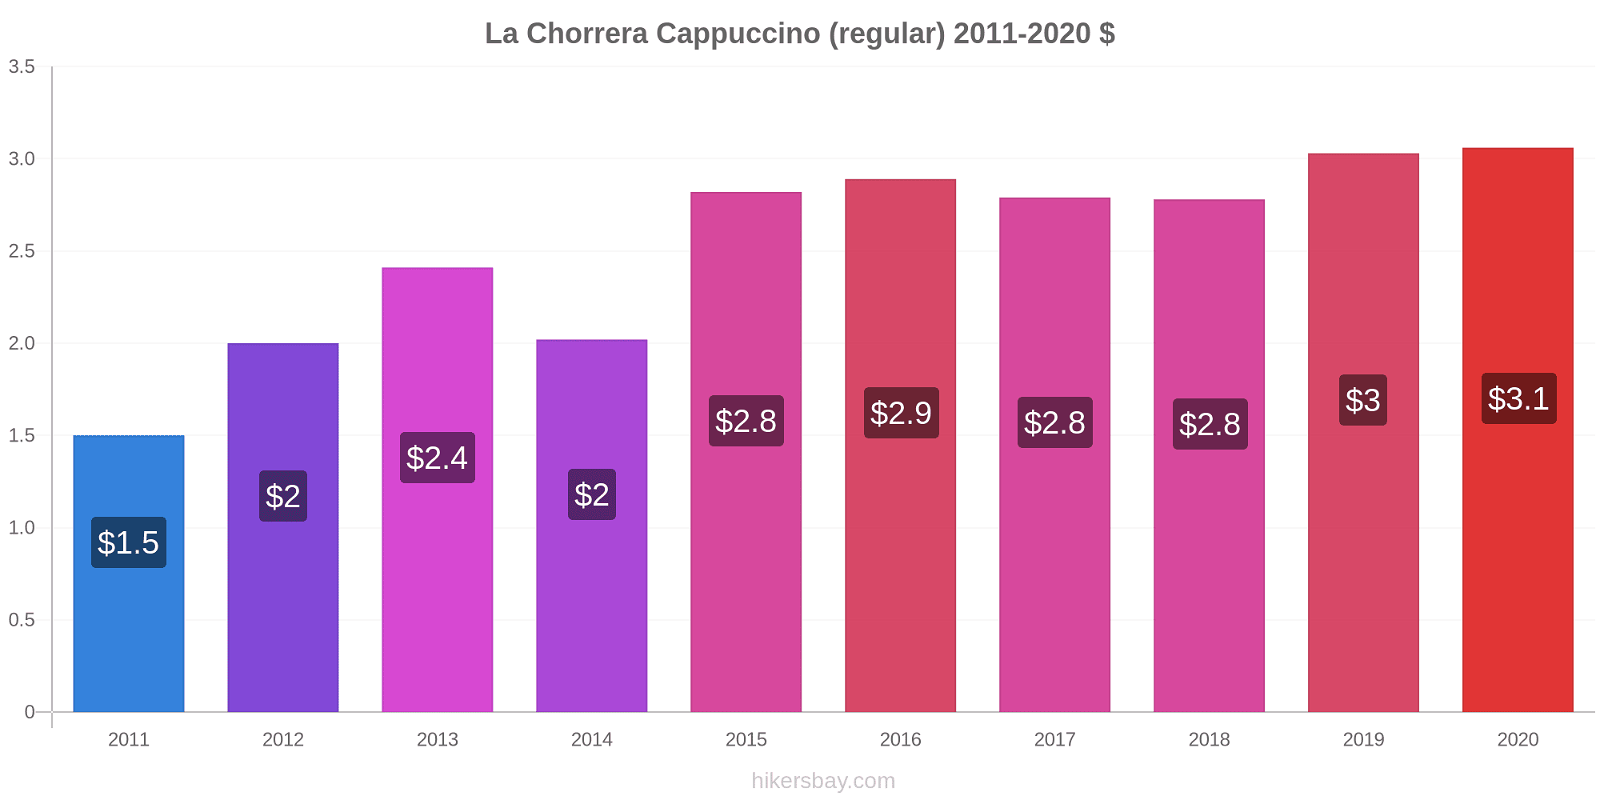 La Chorrera price changes Cappuccino (regular) hikersbay.com